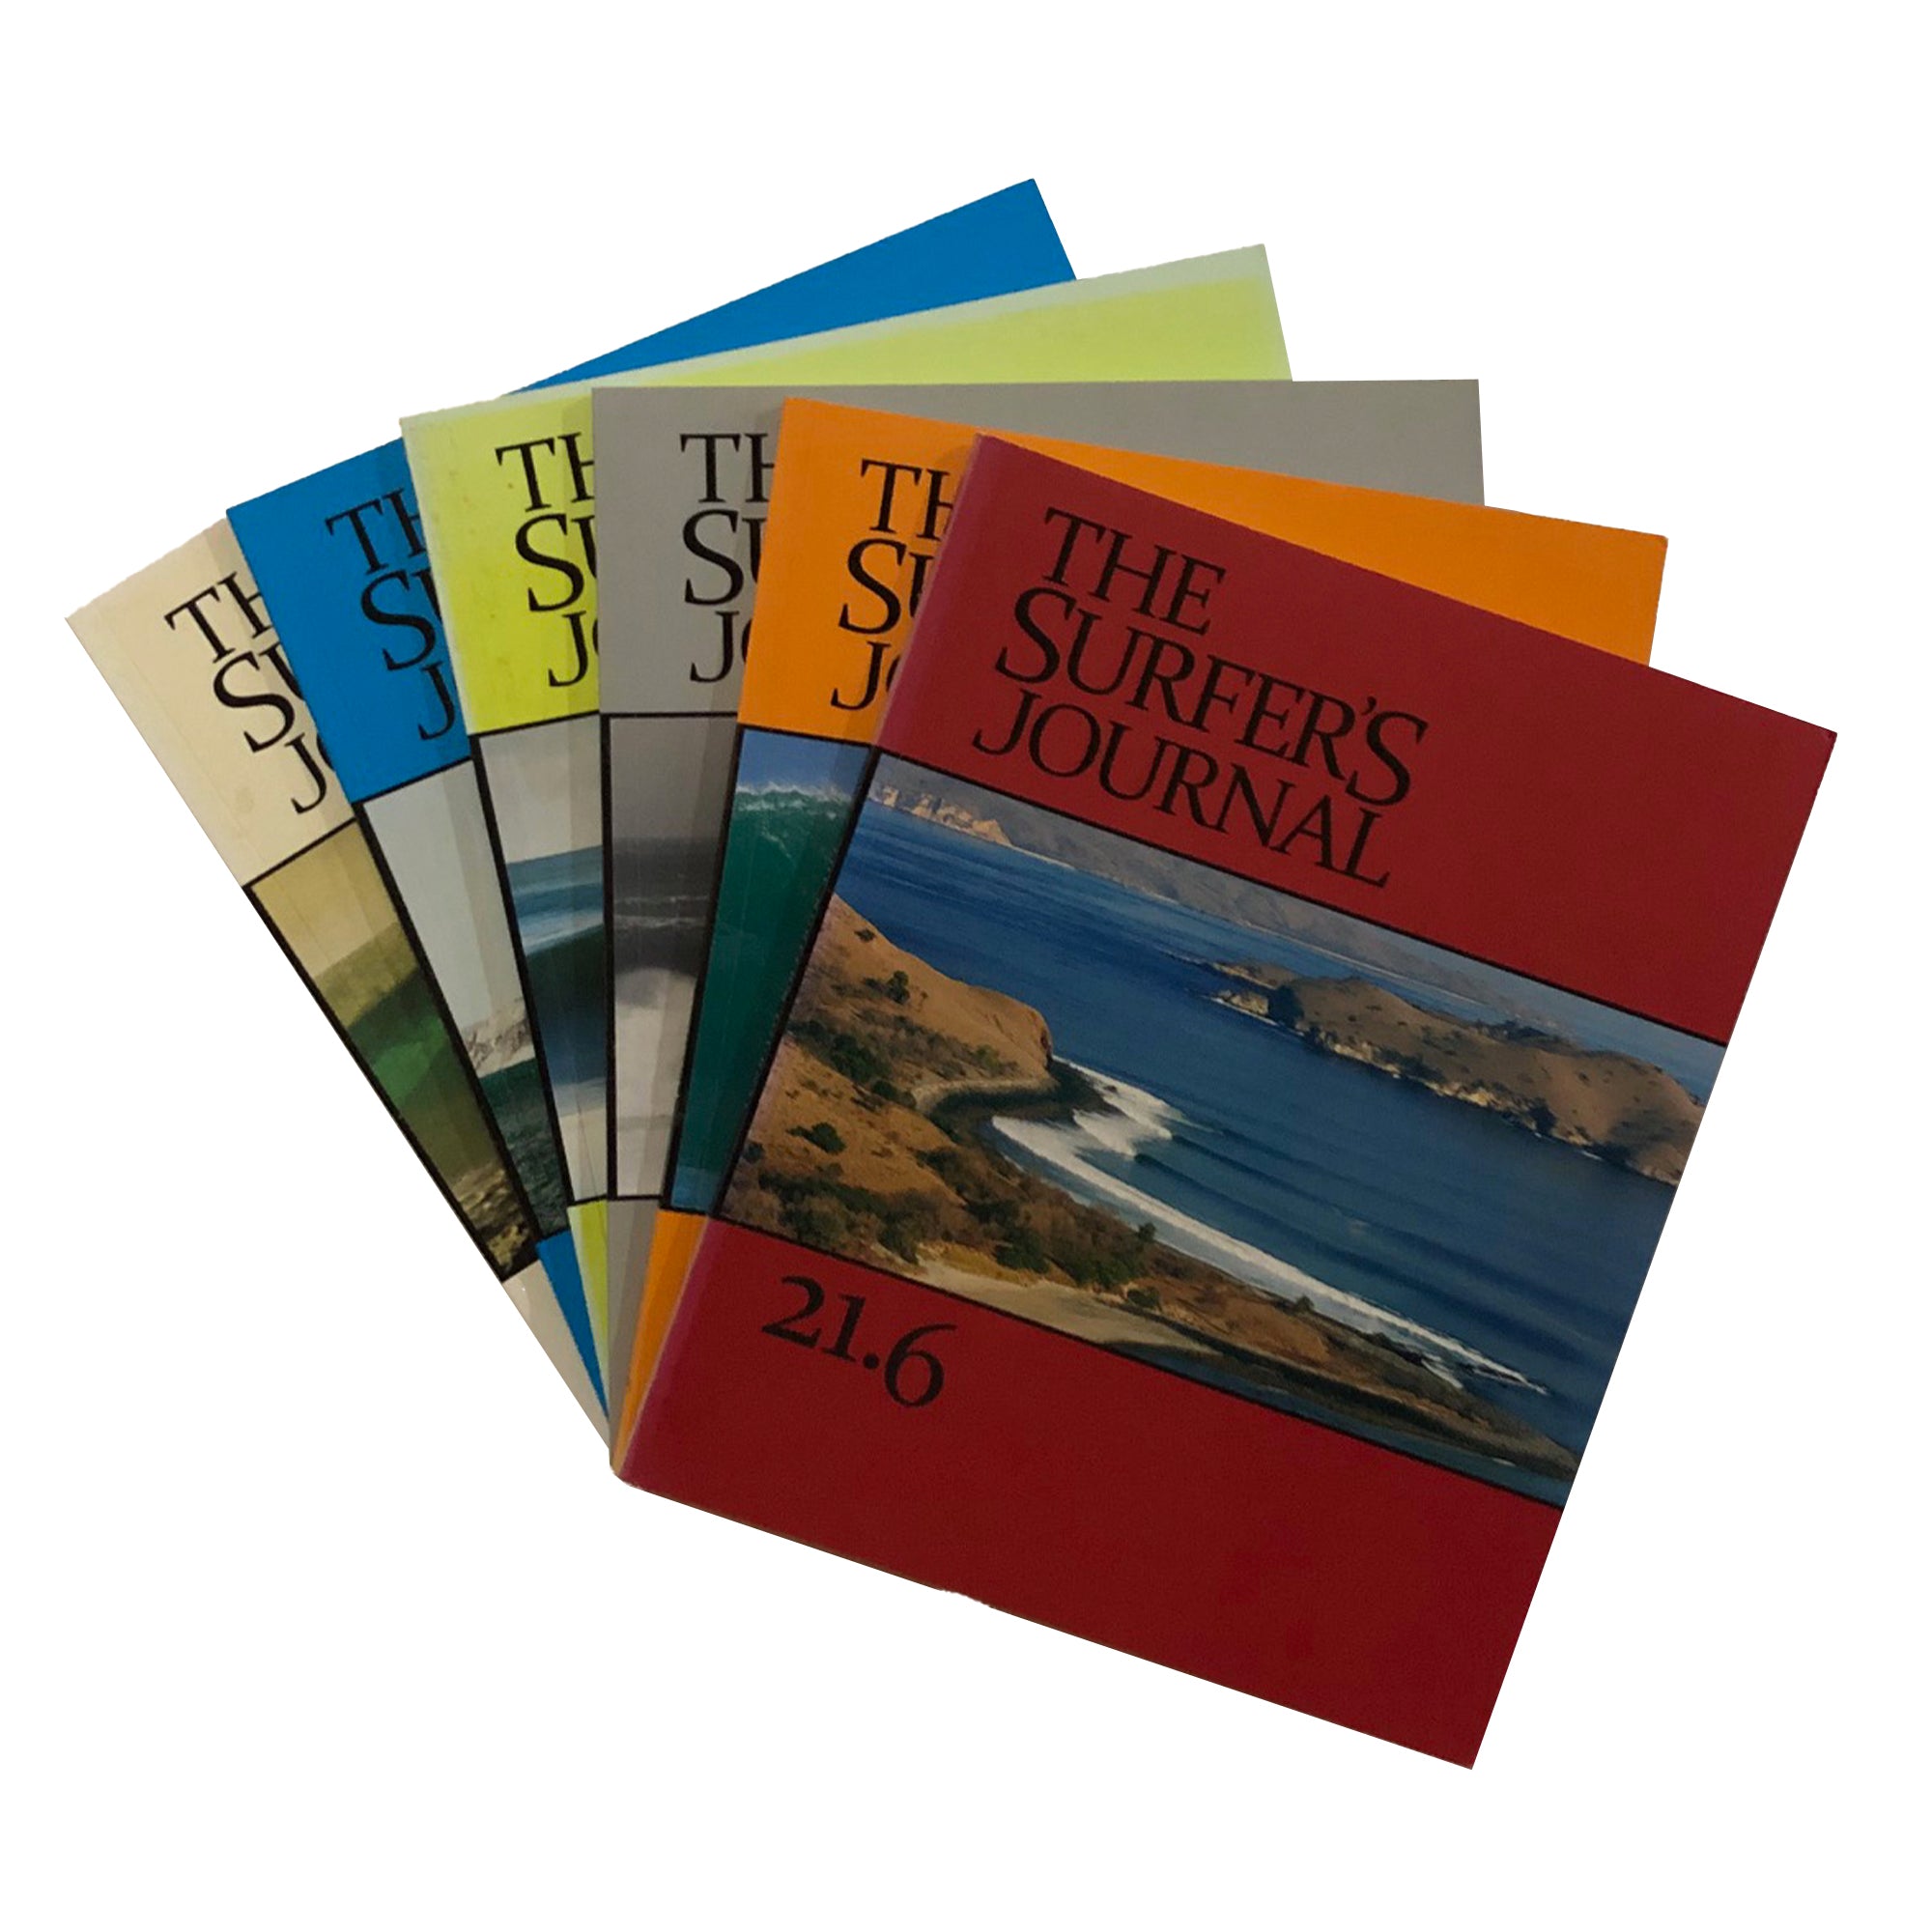 The Surfer's Journal Archives Volume 21